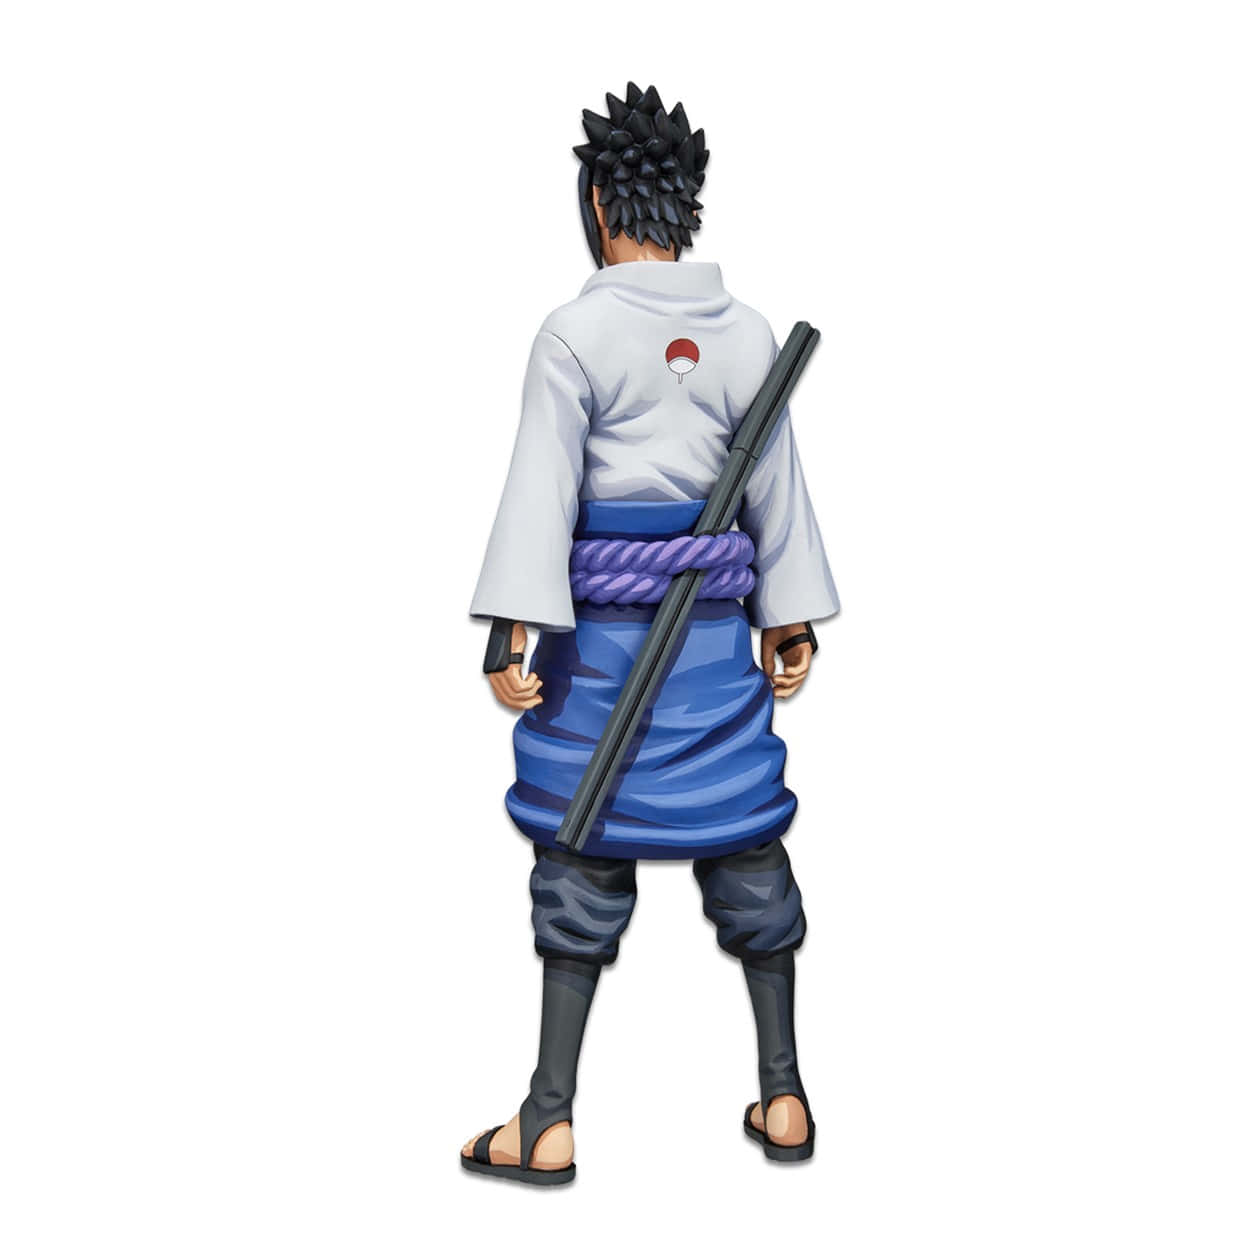 Sasukeuchiha, Ein Schritt Näher An Seinem Schicksal